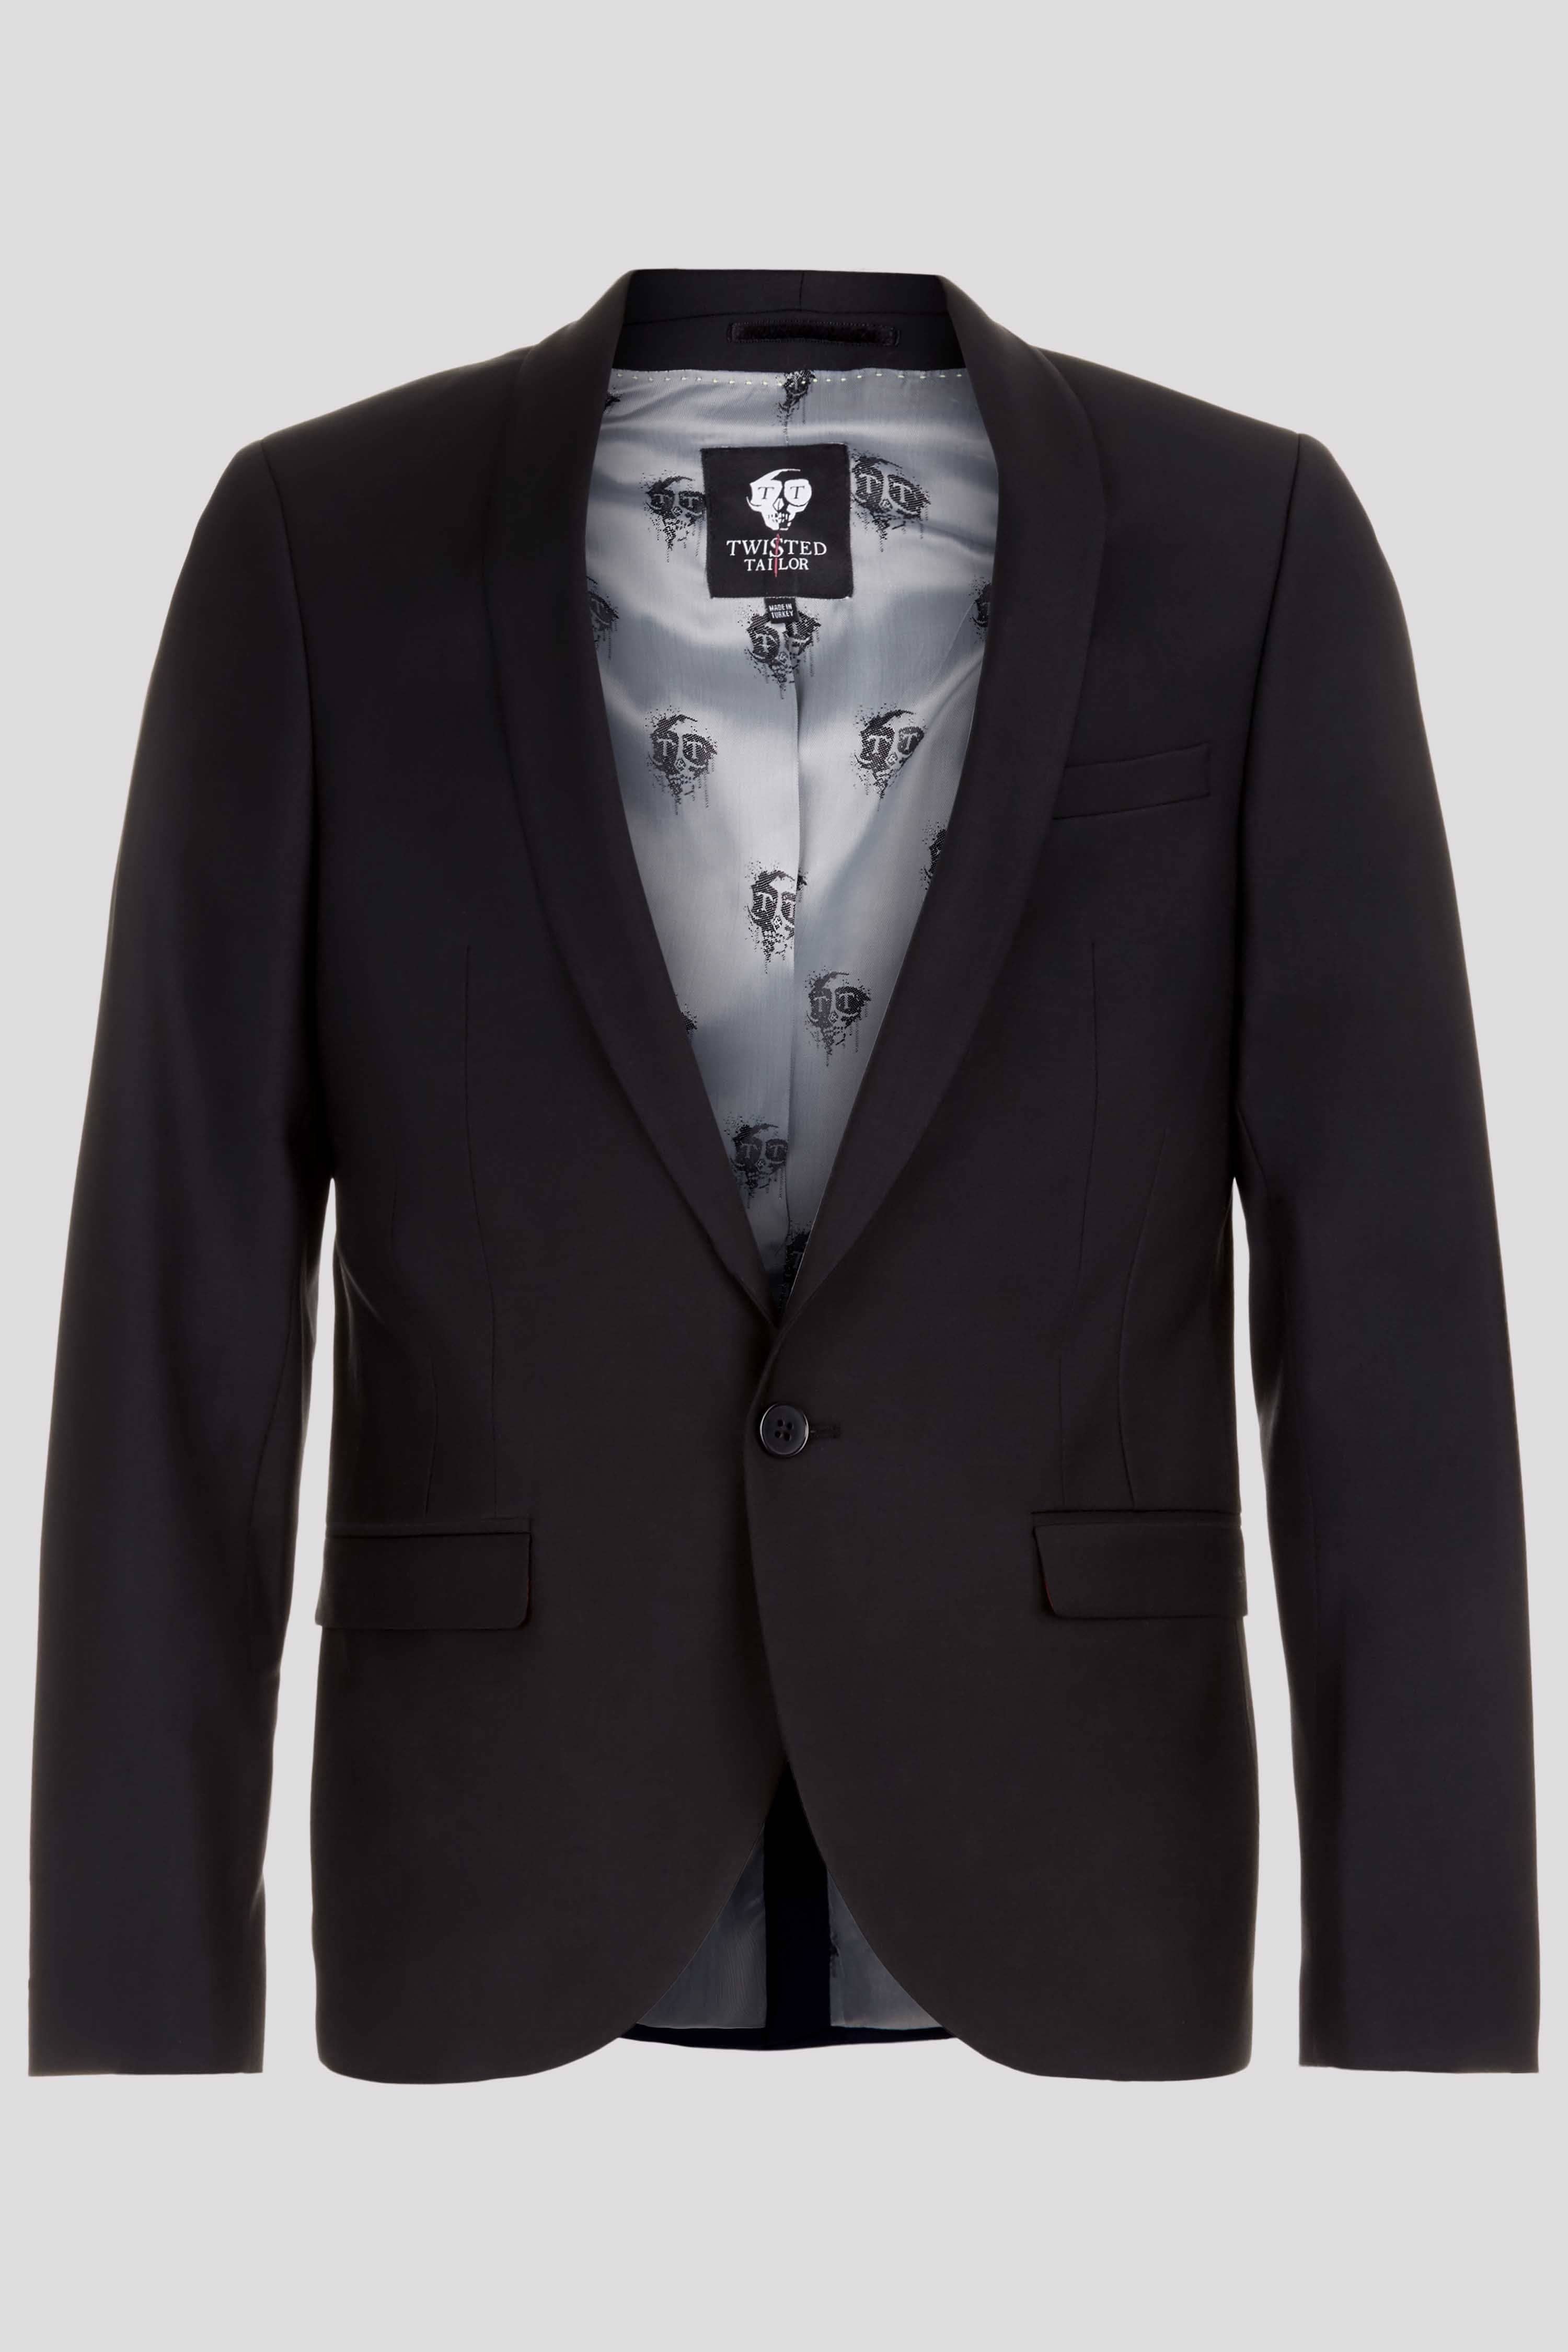 Twisted Tailor Ellroy Skinny Fit Black Suit Jacket